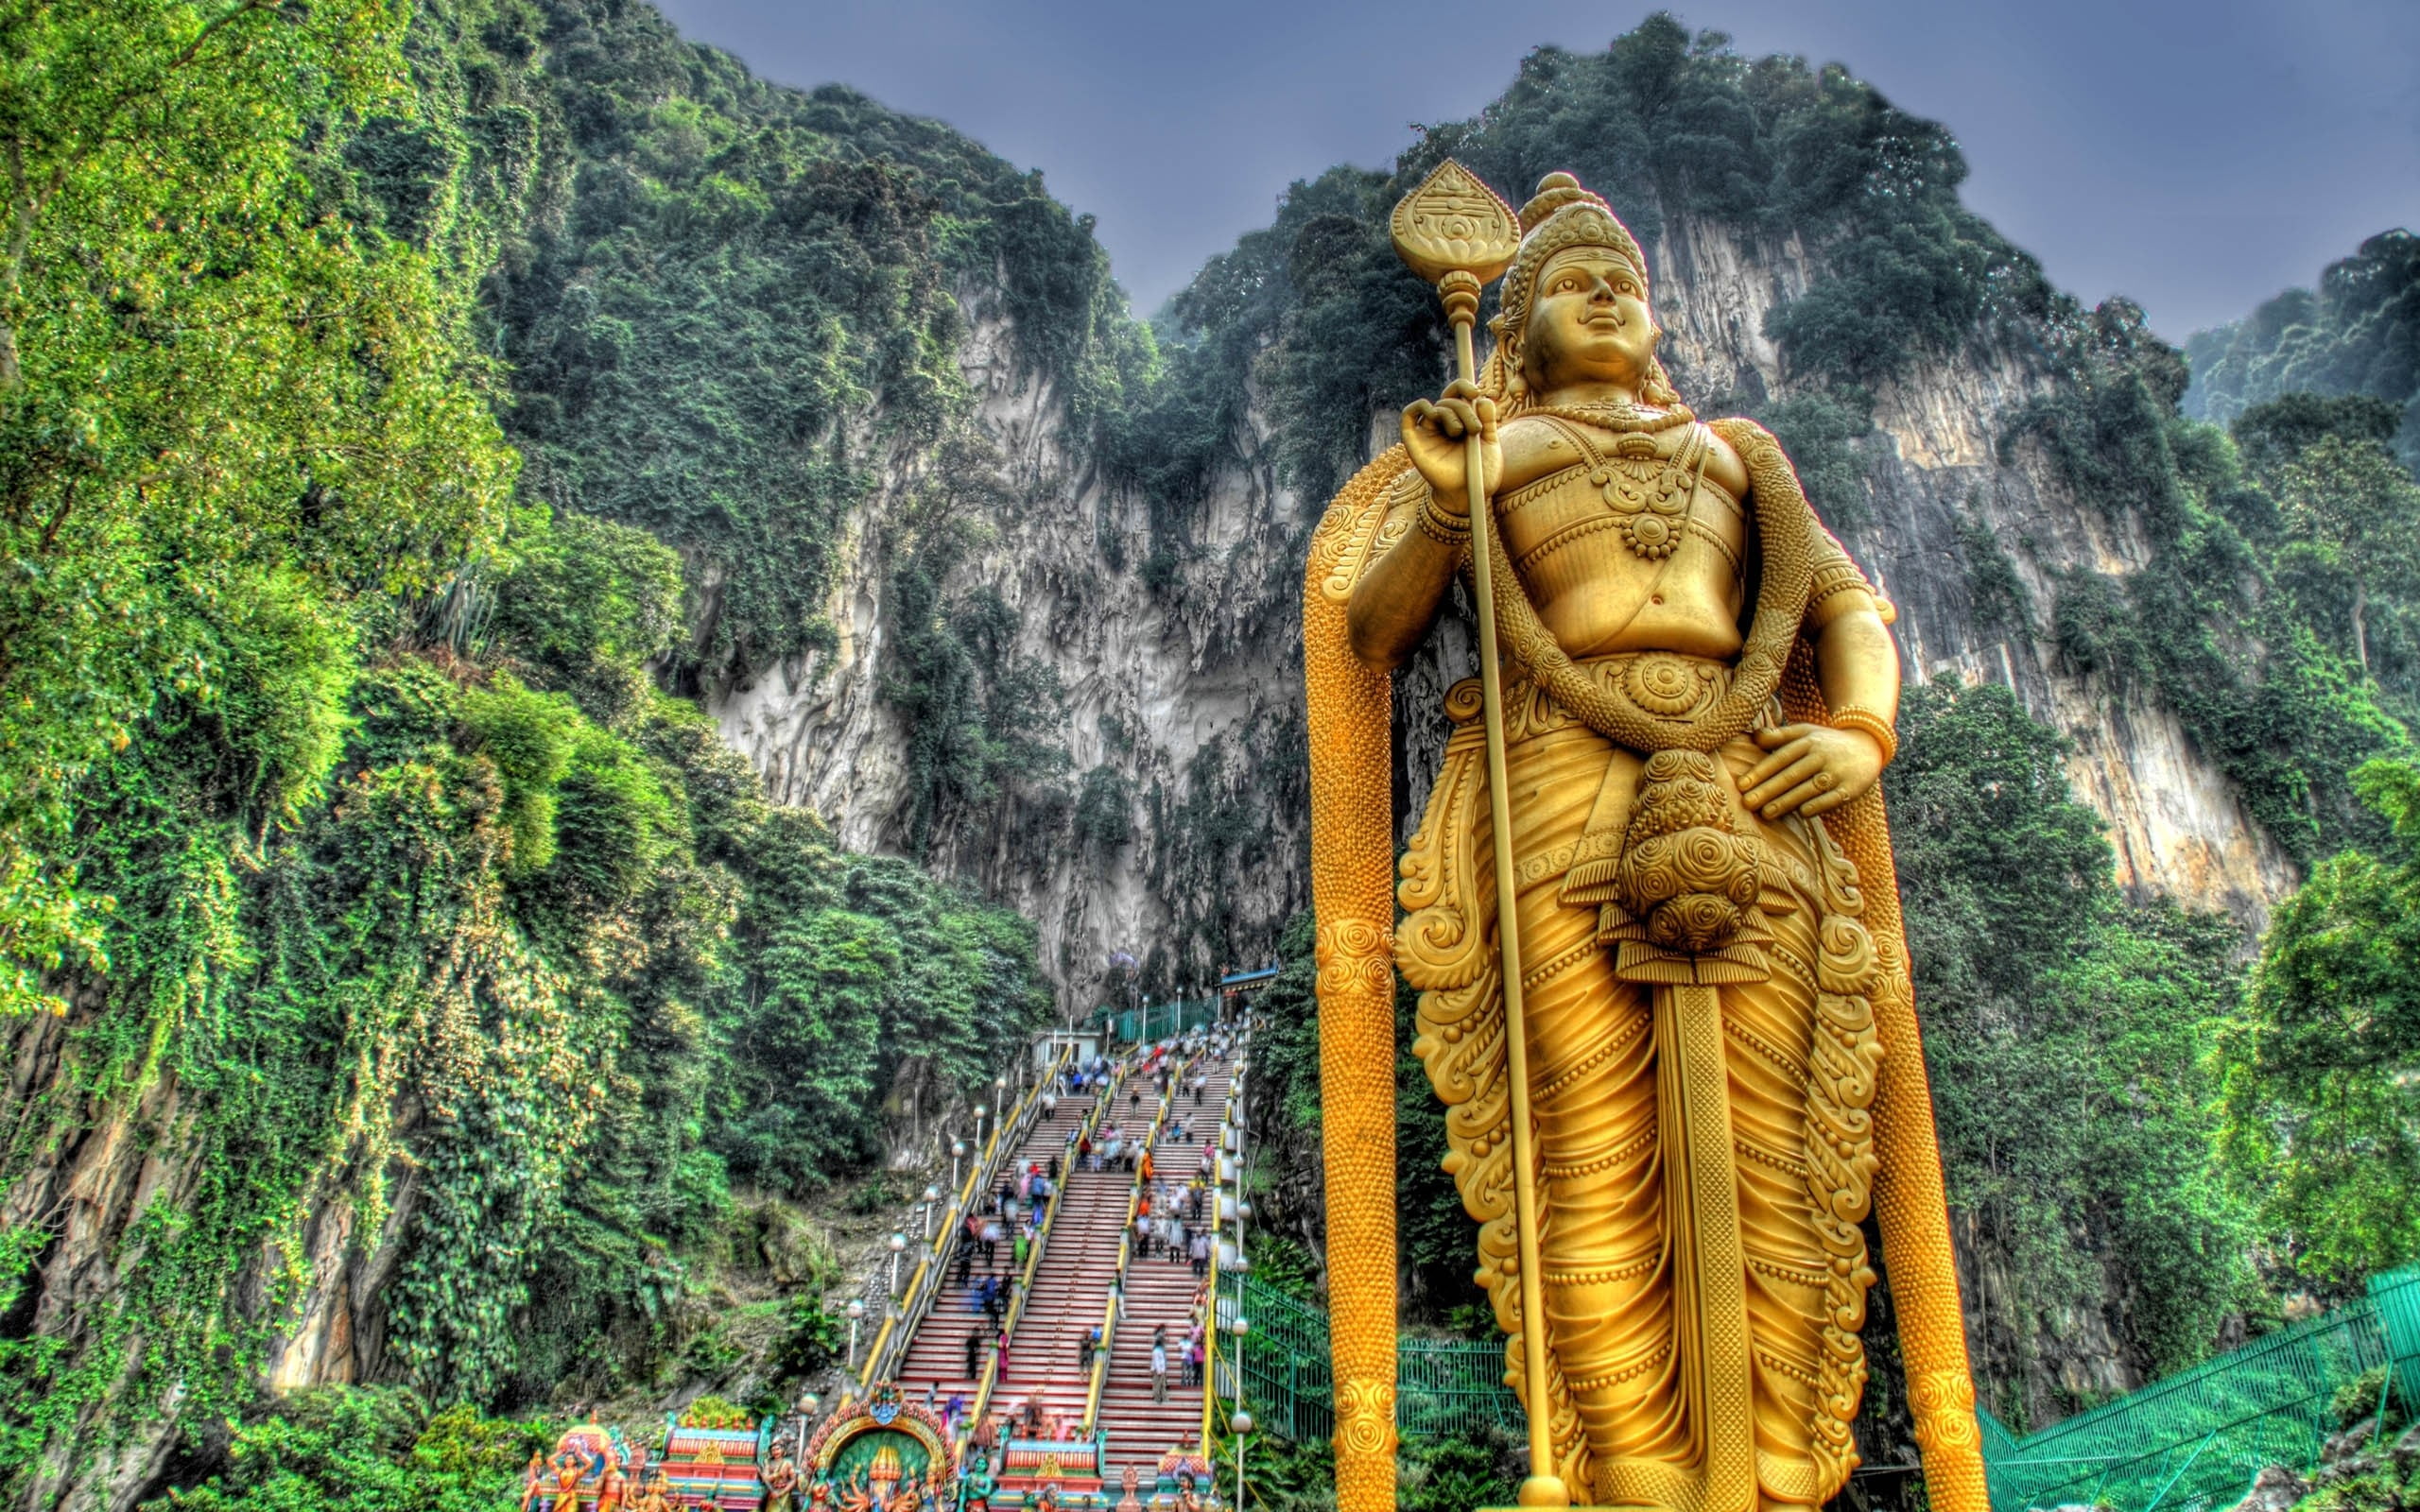 gold Hindu god statue, murugan, malaysia, stairs, hills, people